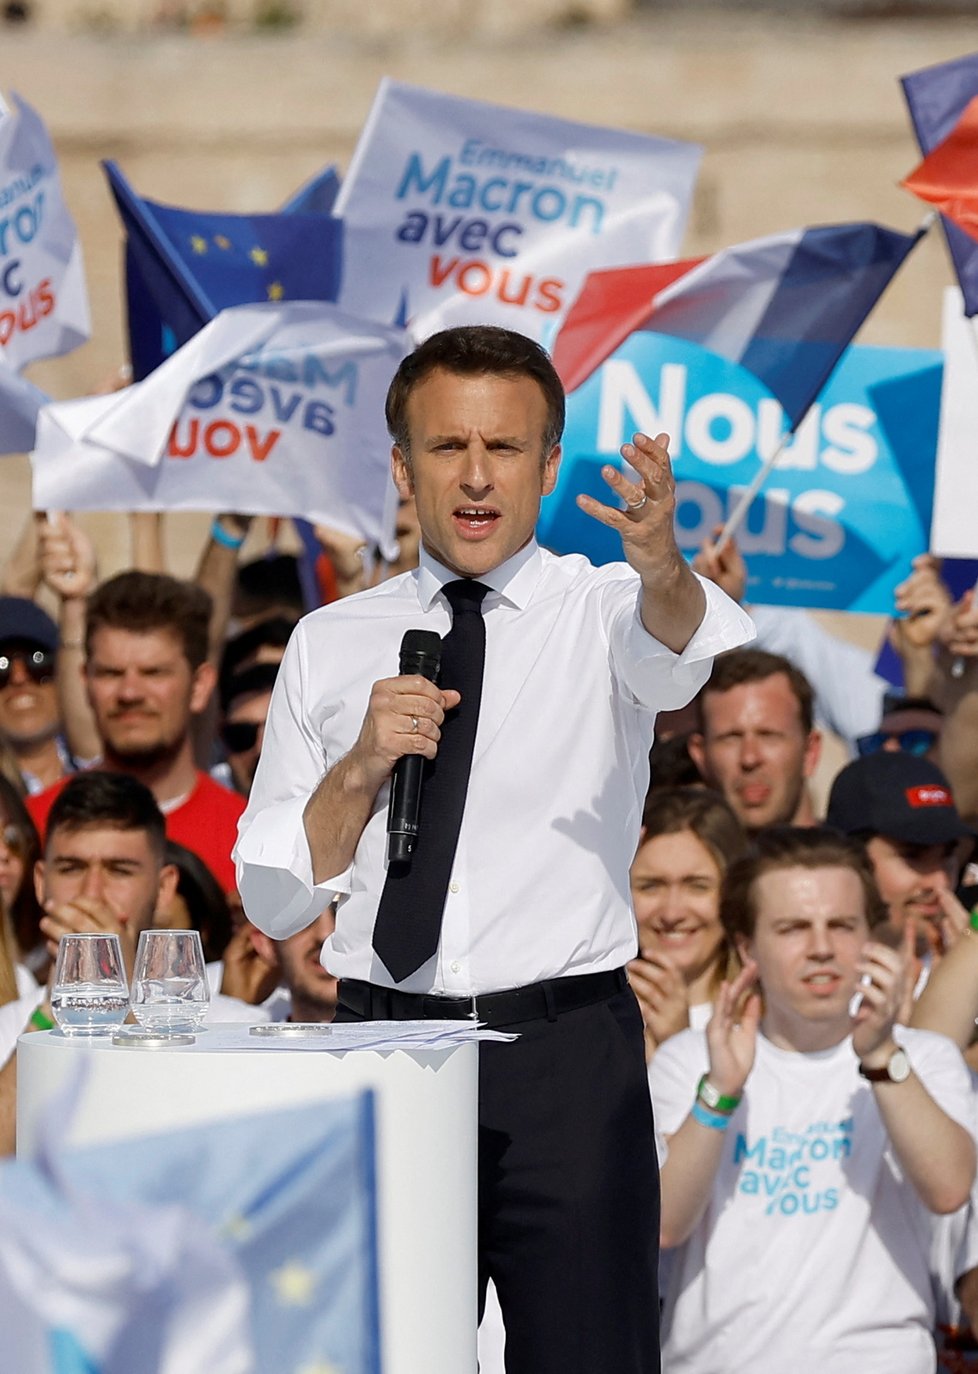 Francouzský prezident Emmanuel Macron.